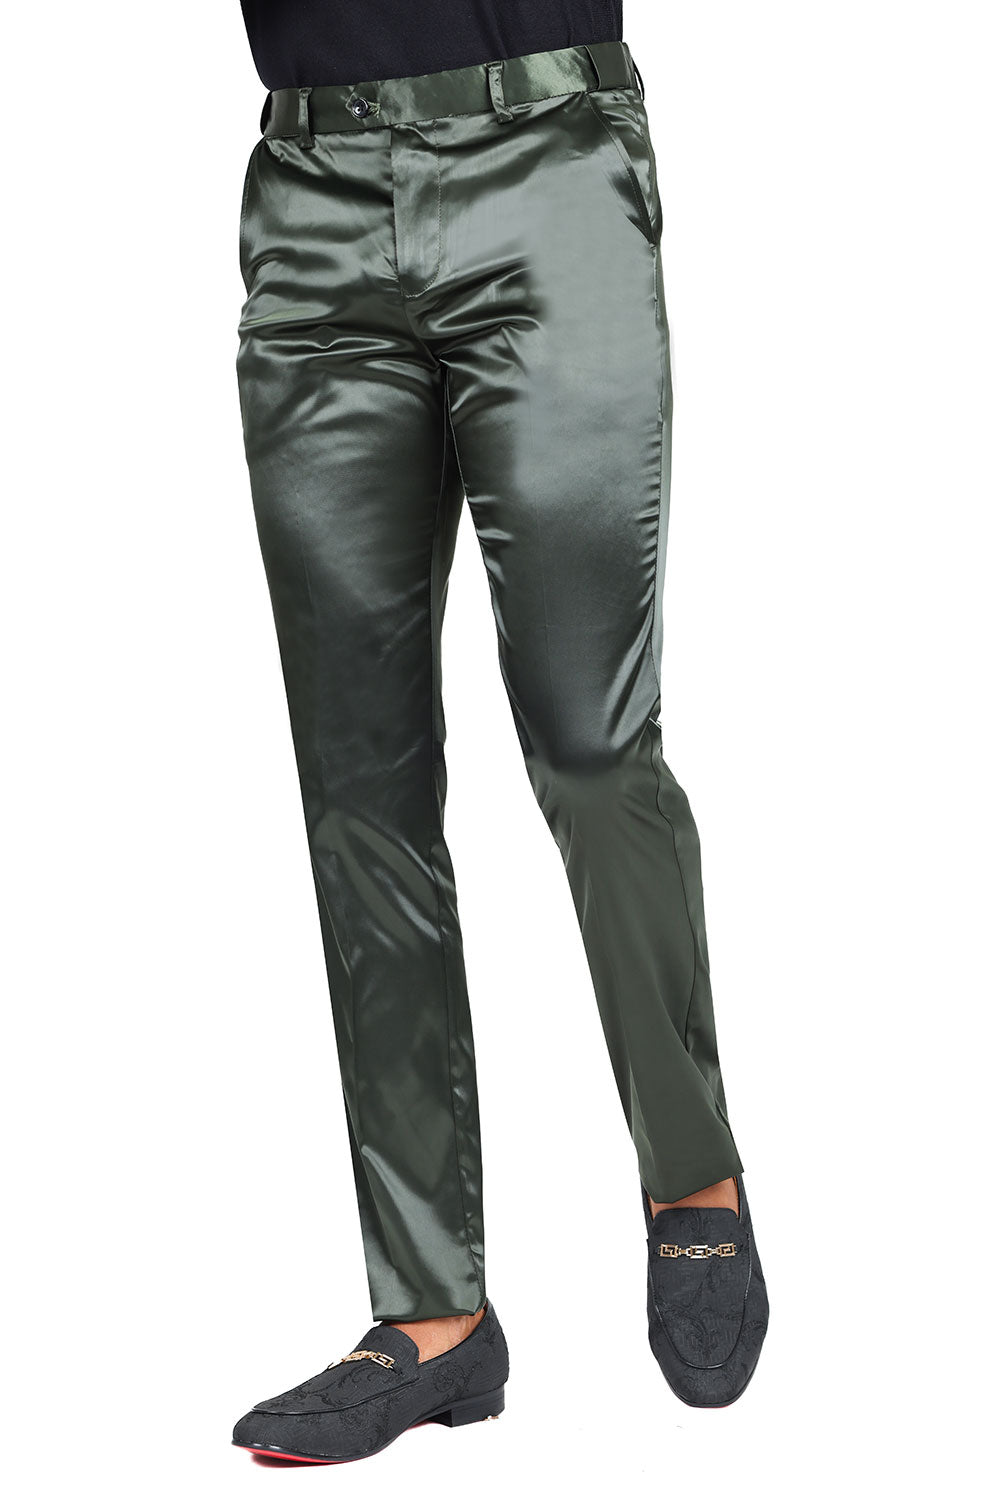 BARABAS Men's Solid Color Shiny Chino Pants VP1010 Olive